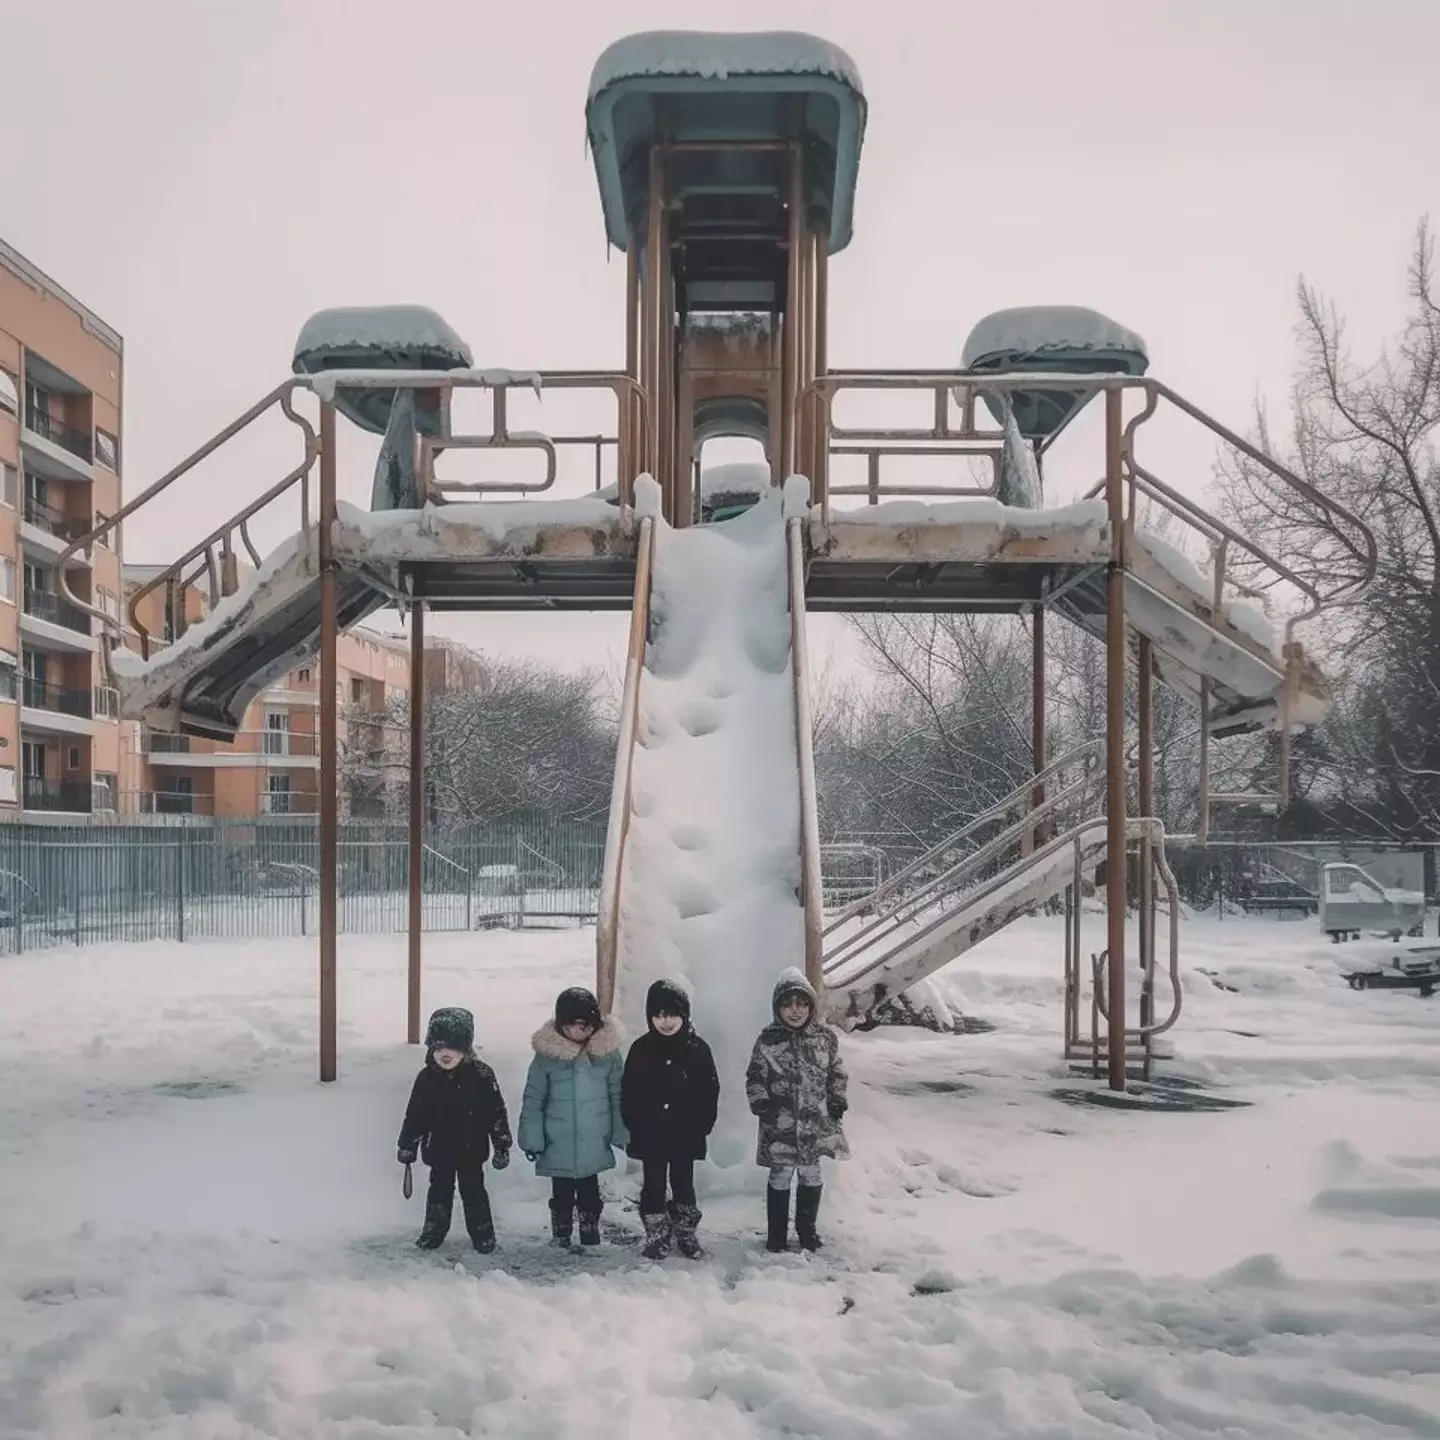 Children + a snowy playground = Coldplay.